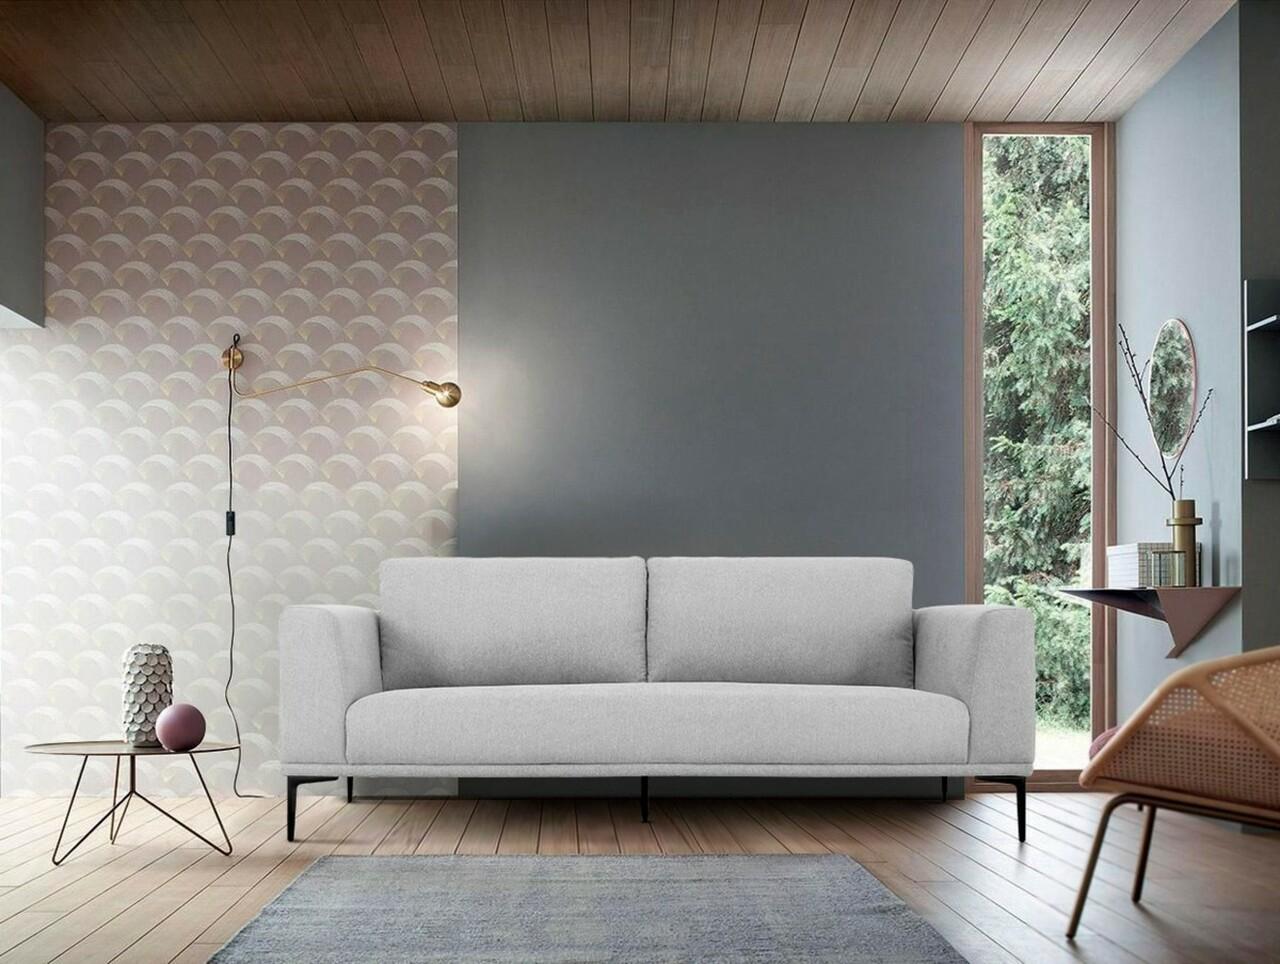 Contemporary, Modern Sofa VGKNK8578-LGRY-S VGKNK8578-LGRY-S in Gray Fabric